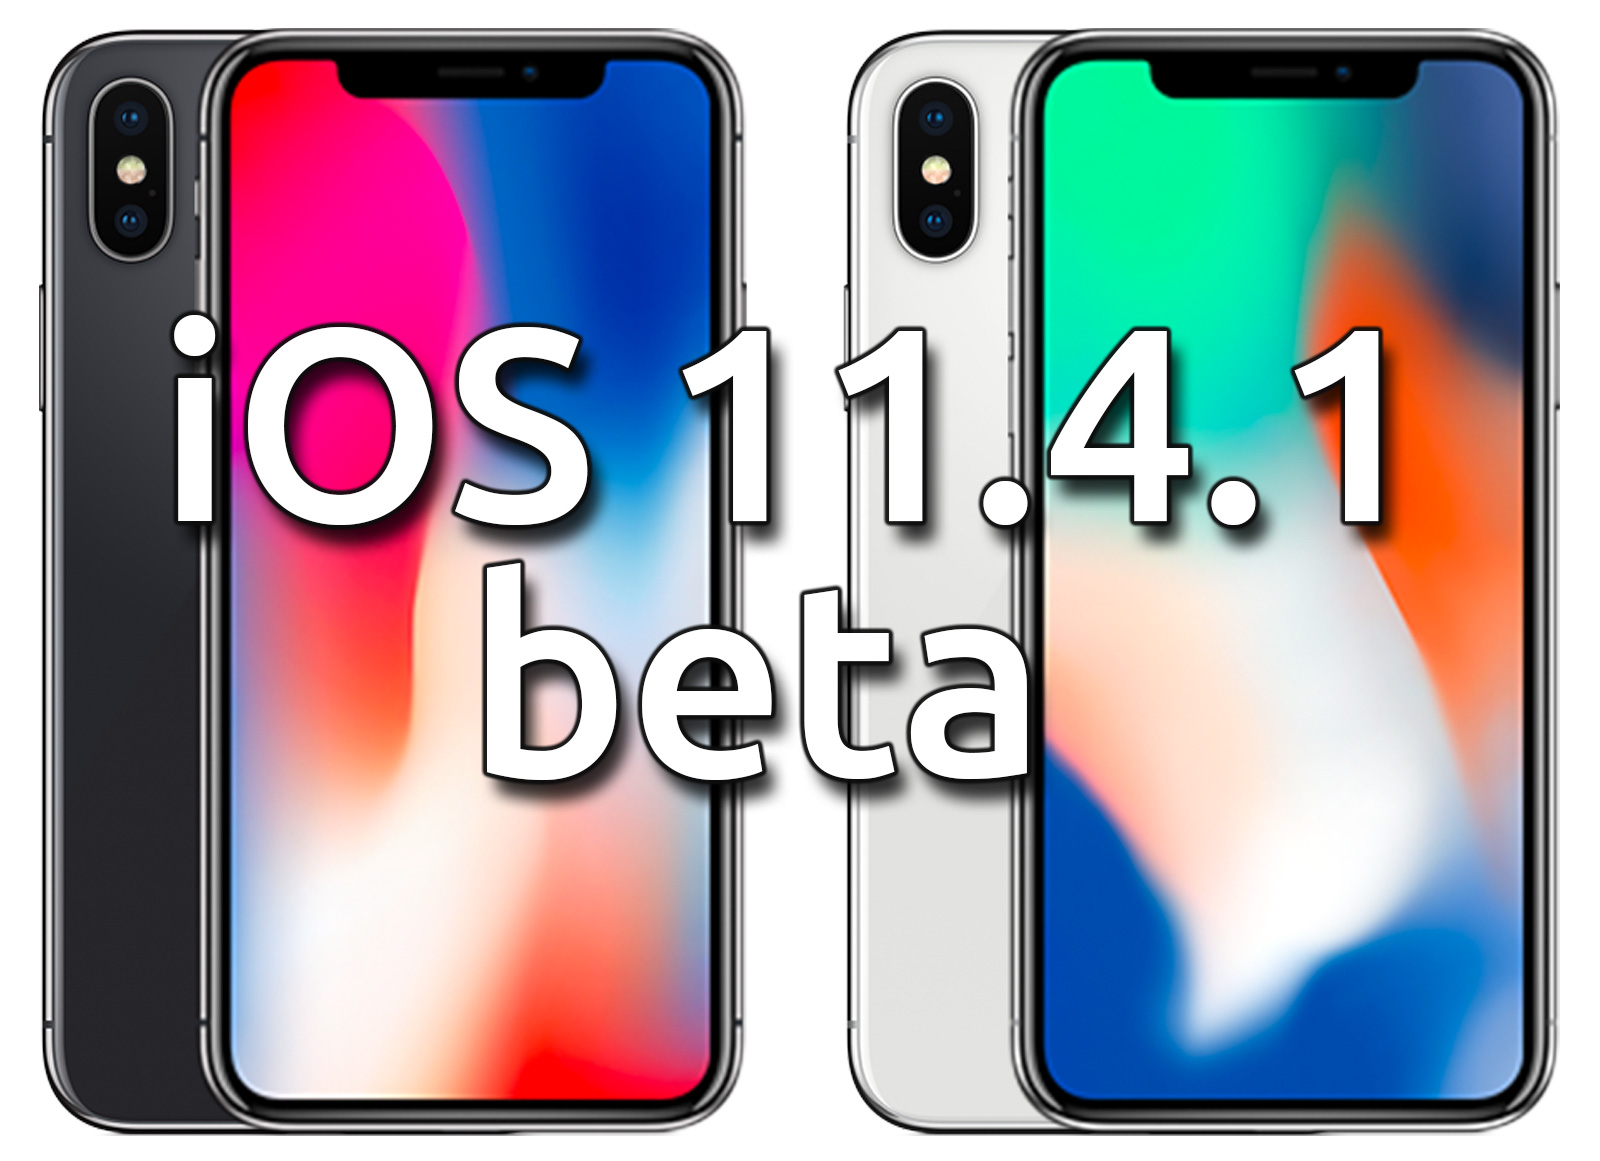 iOS 11.4.1 beta